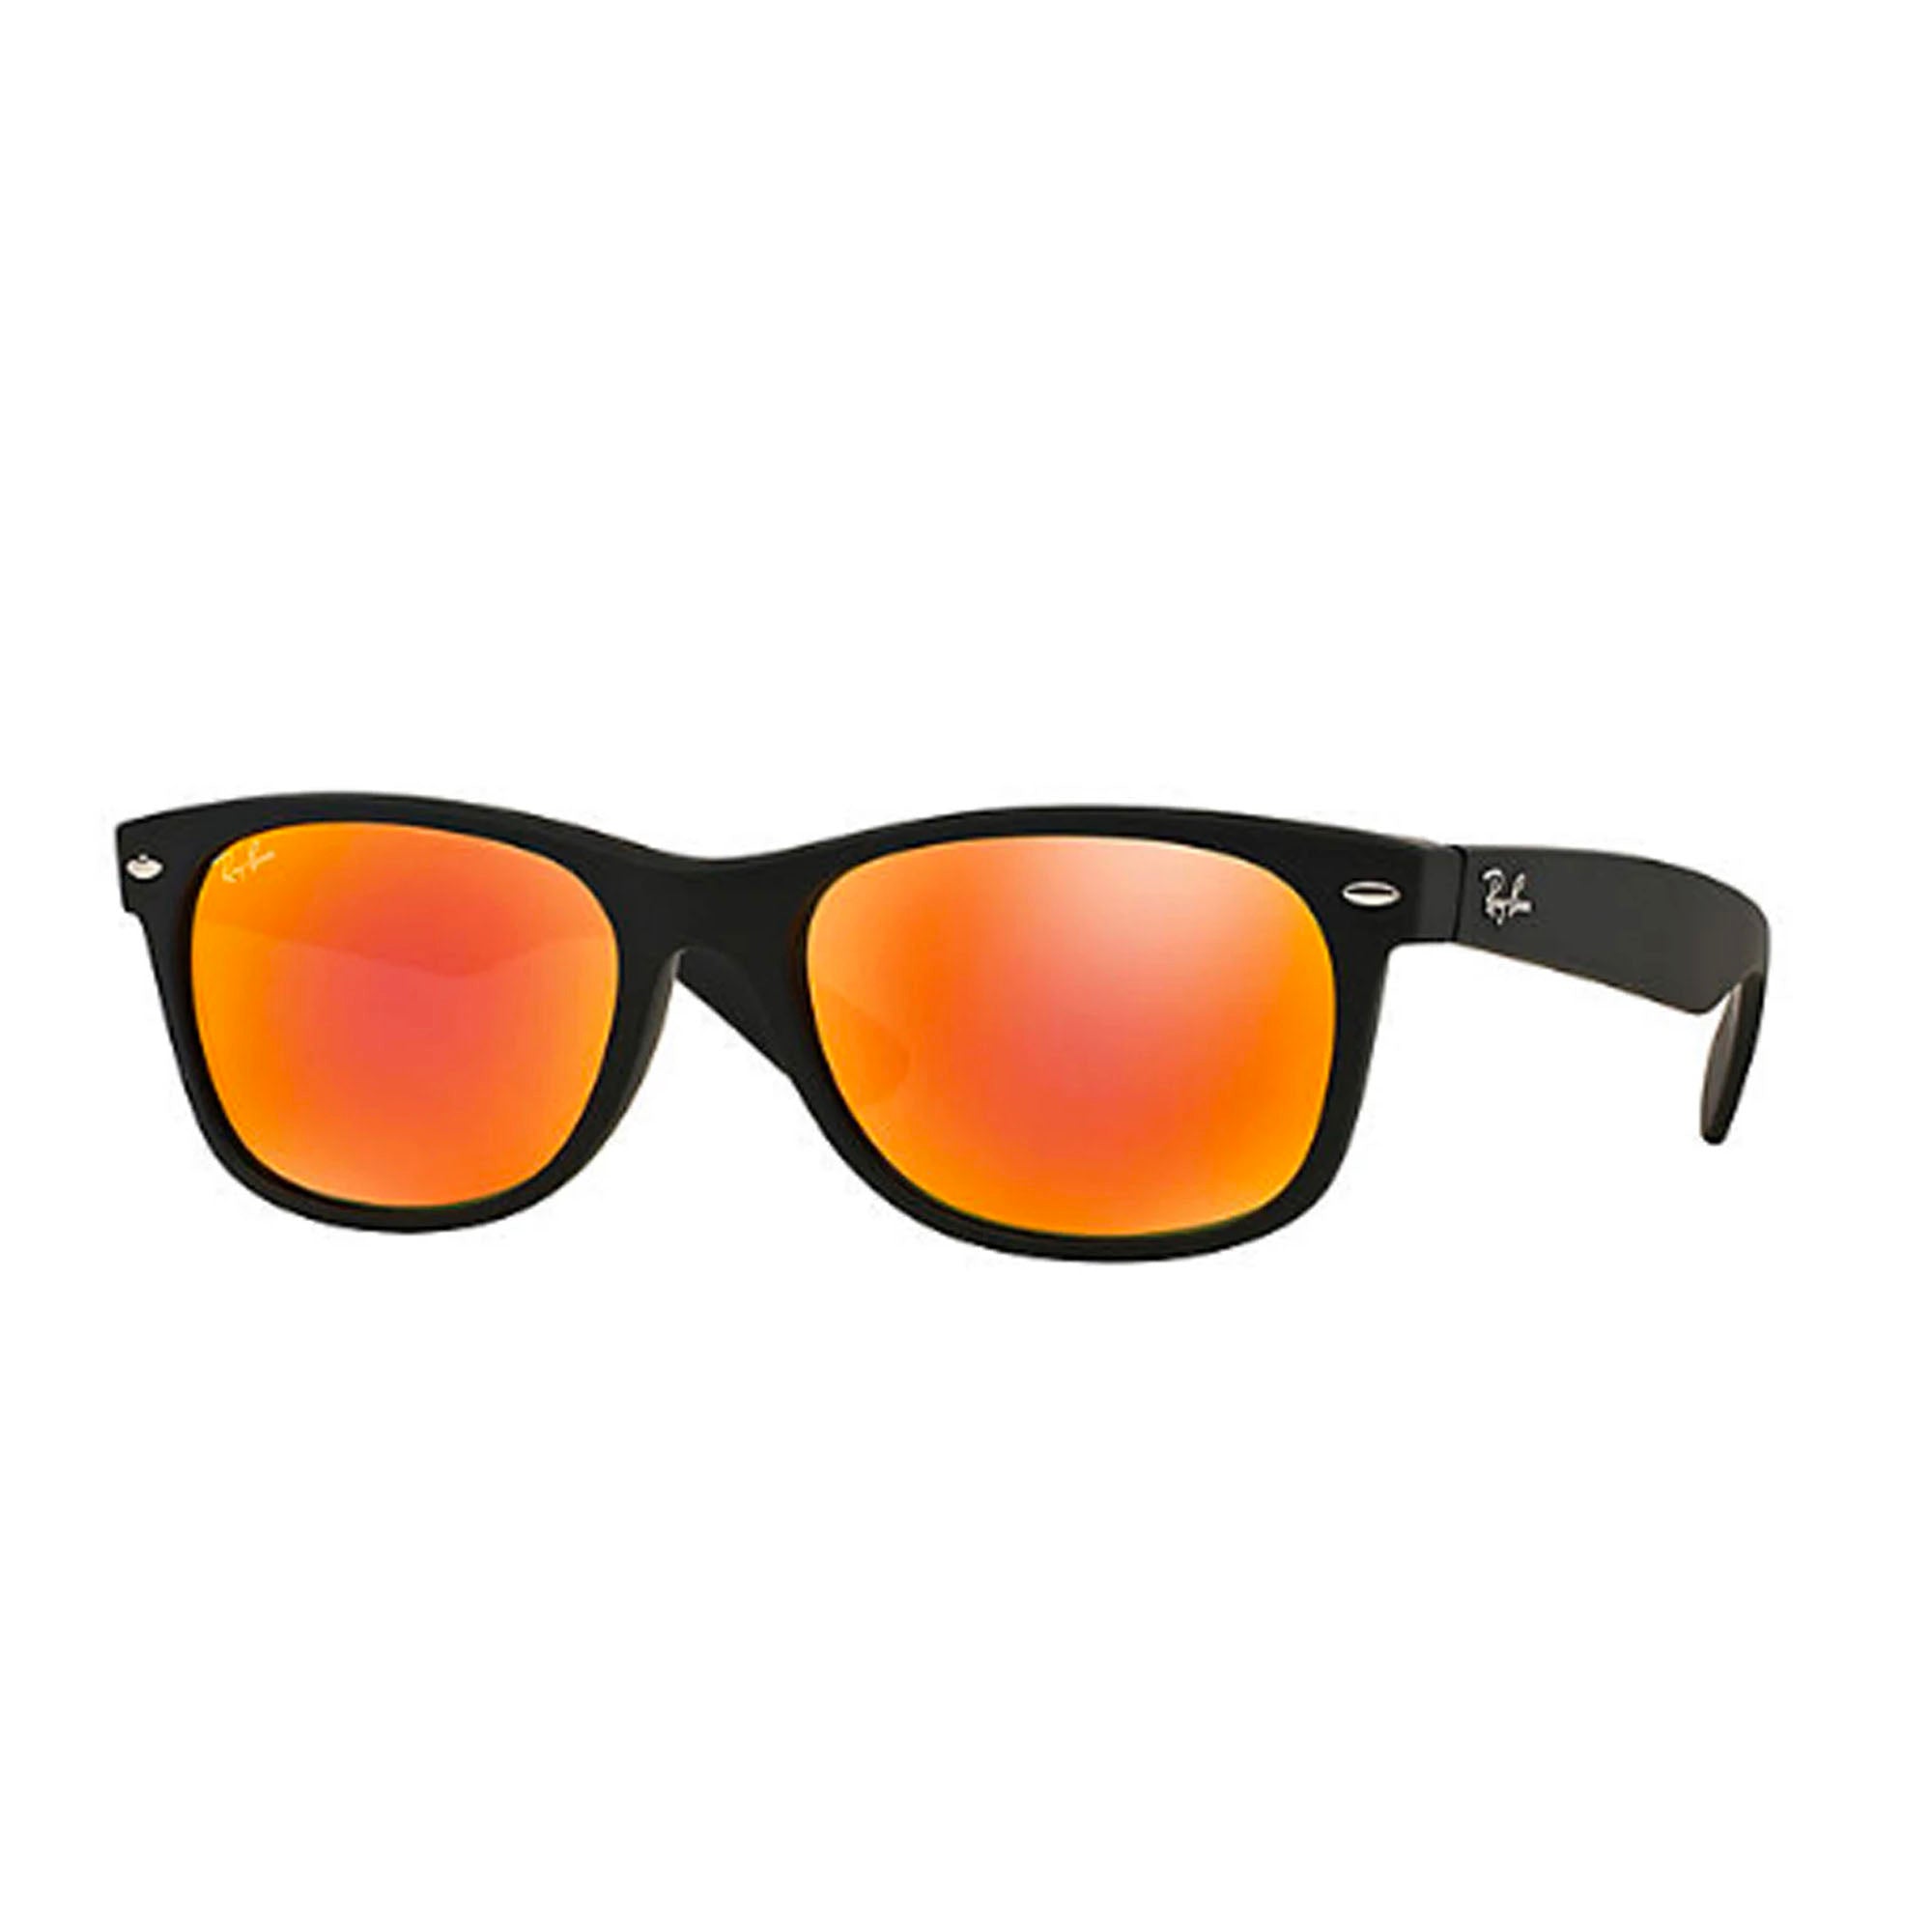 Ray-Ban New Wayfarer Men's Sunglasses